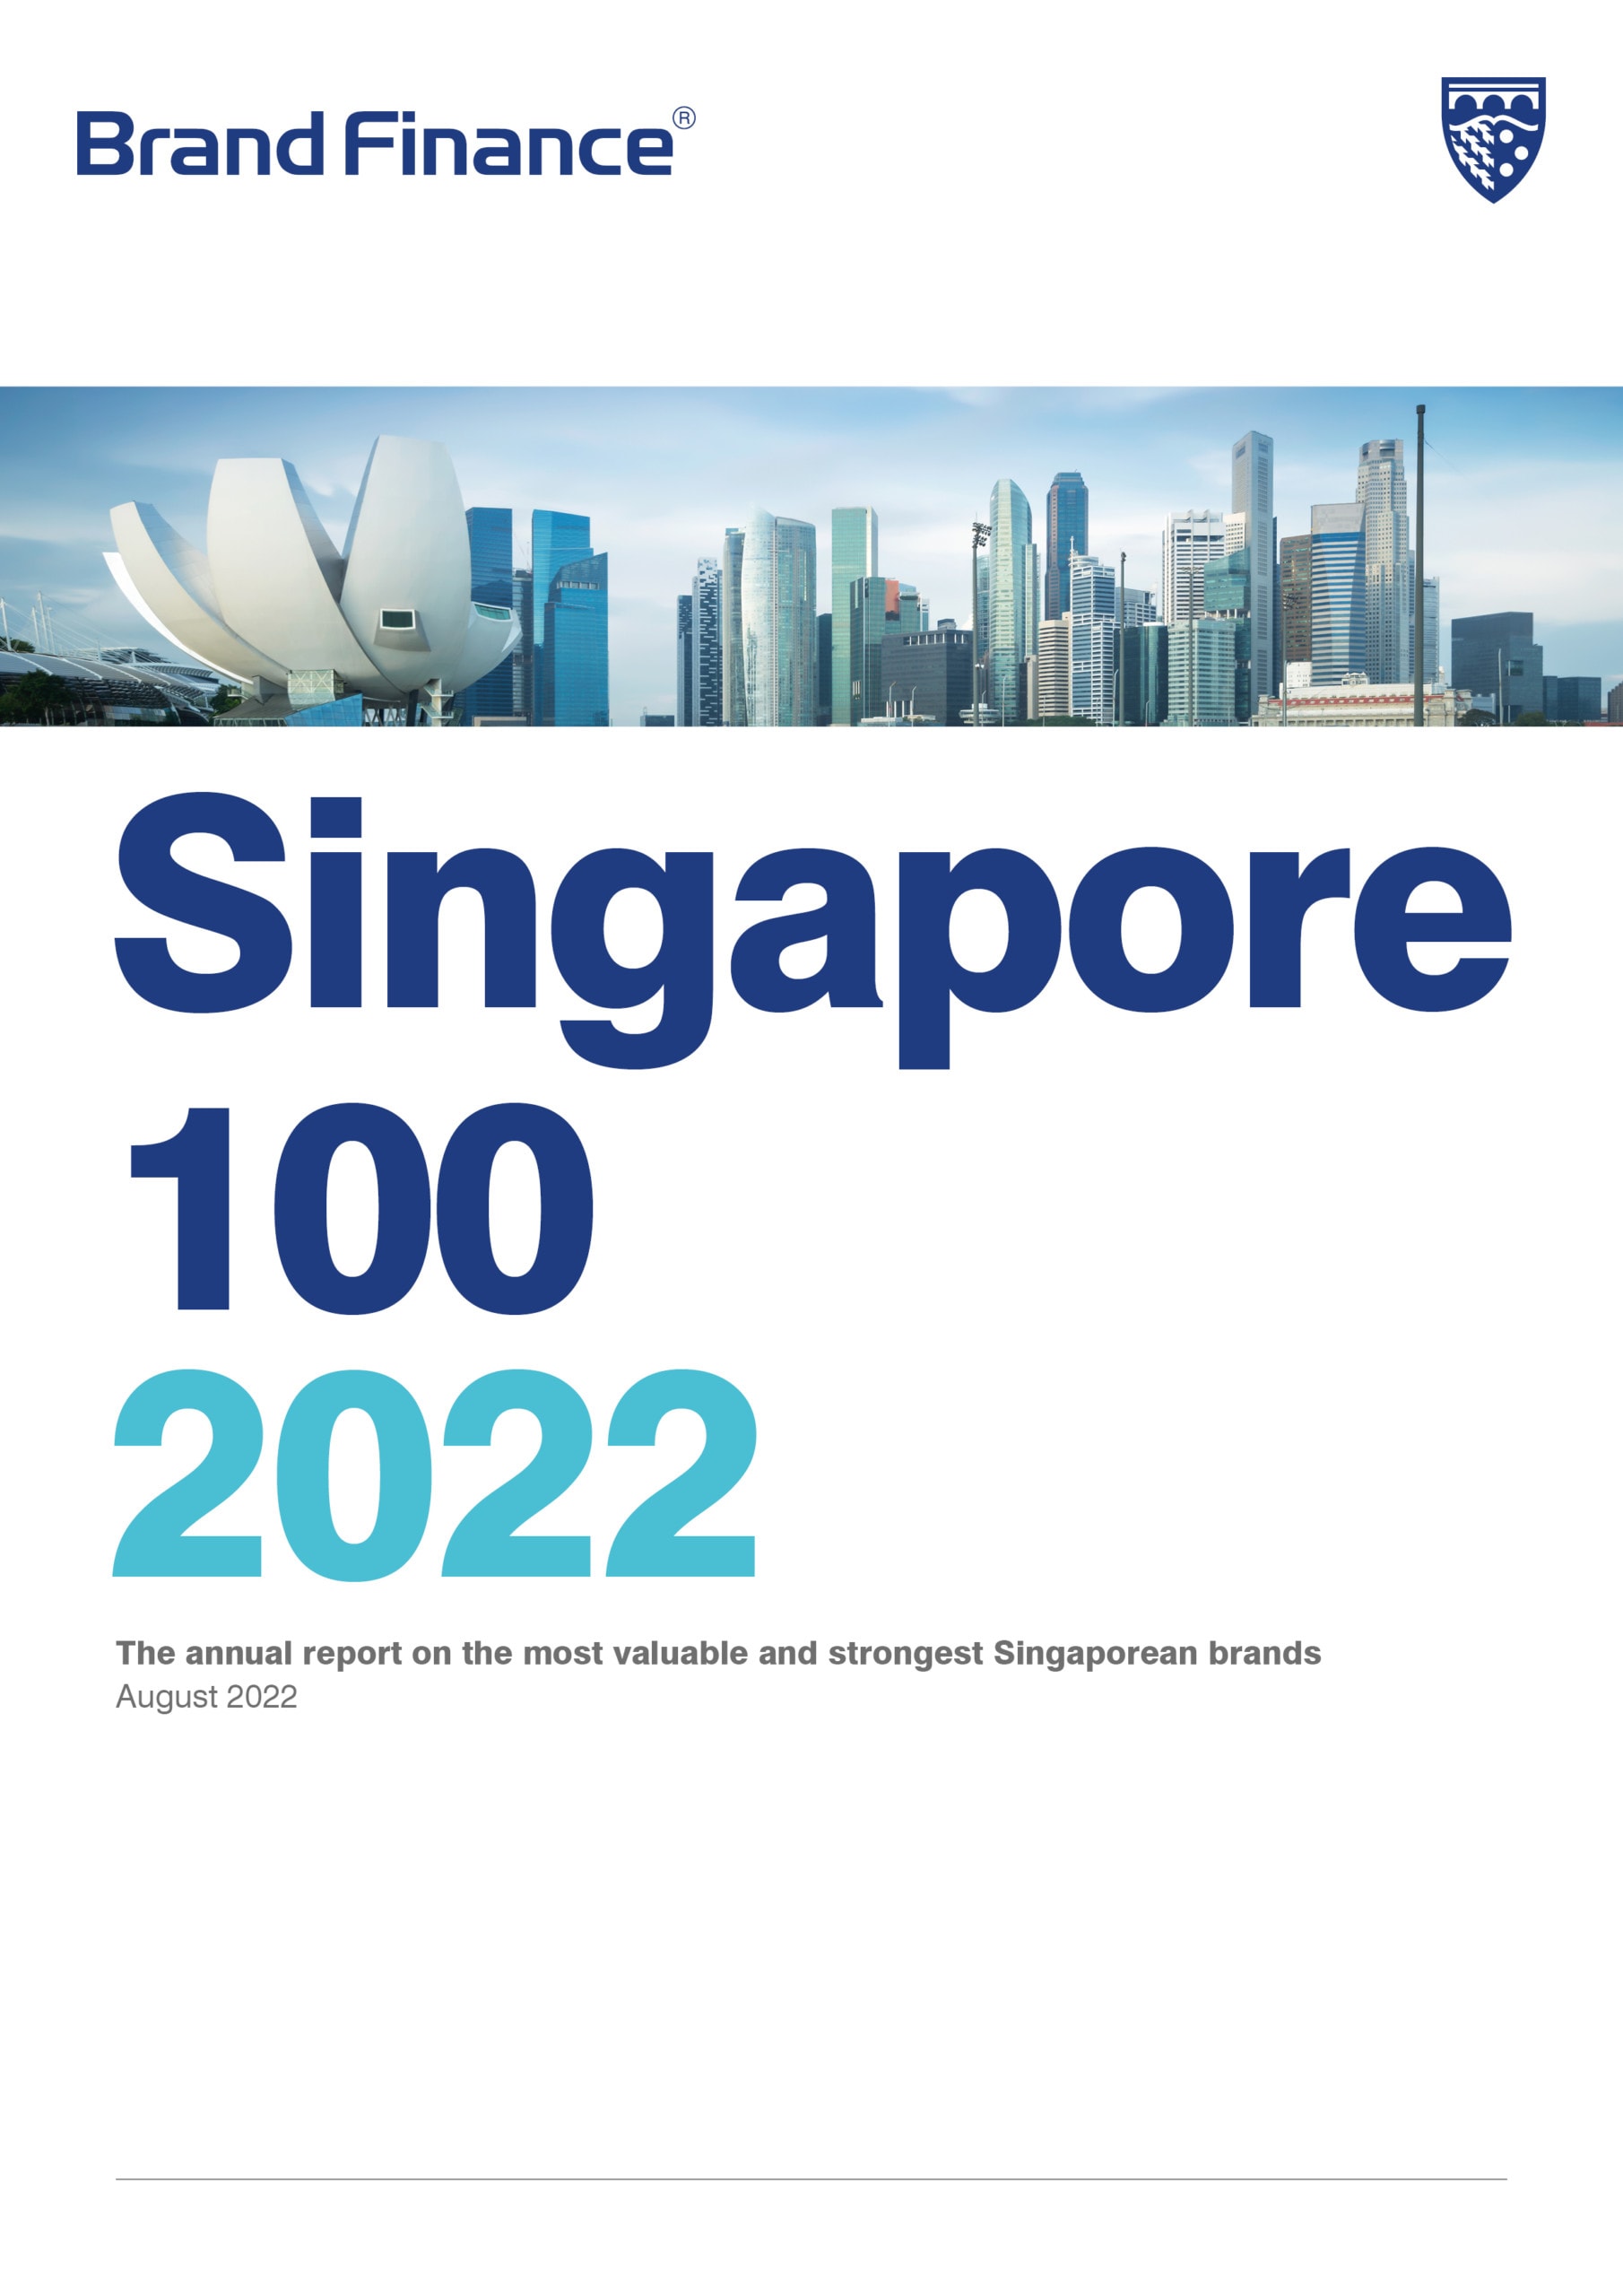 Brand Finance Singapore 100 2022